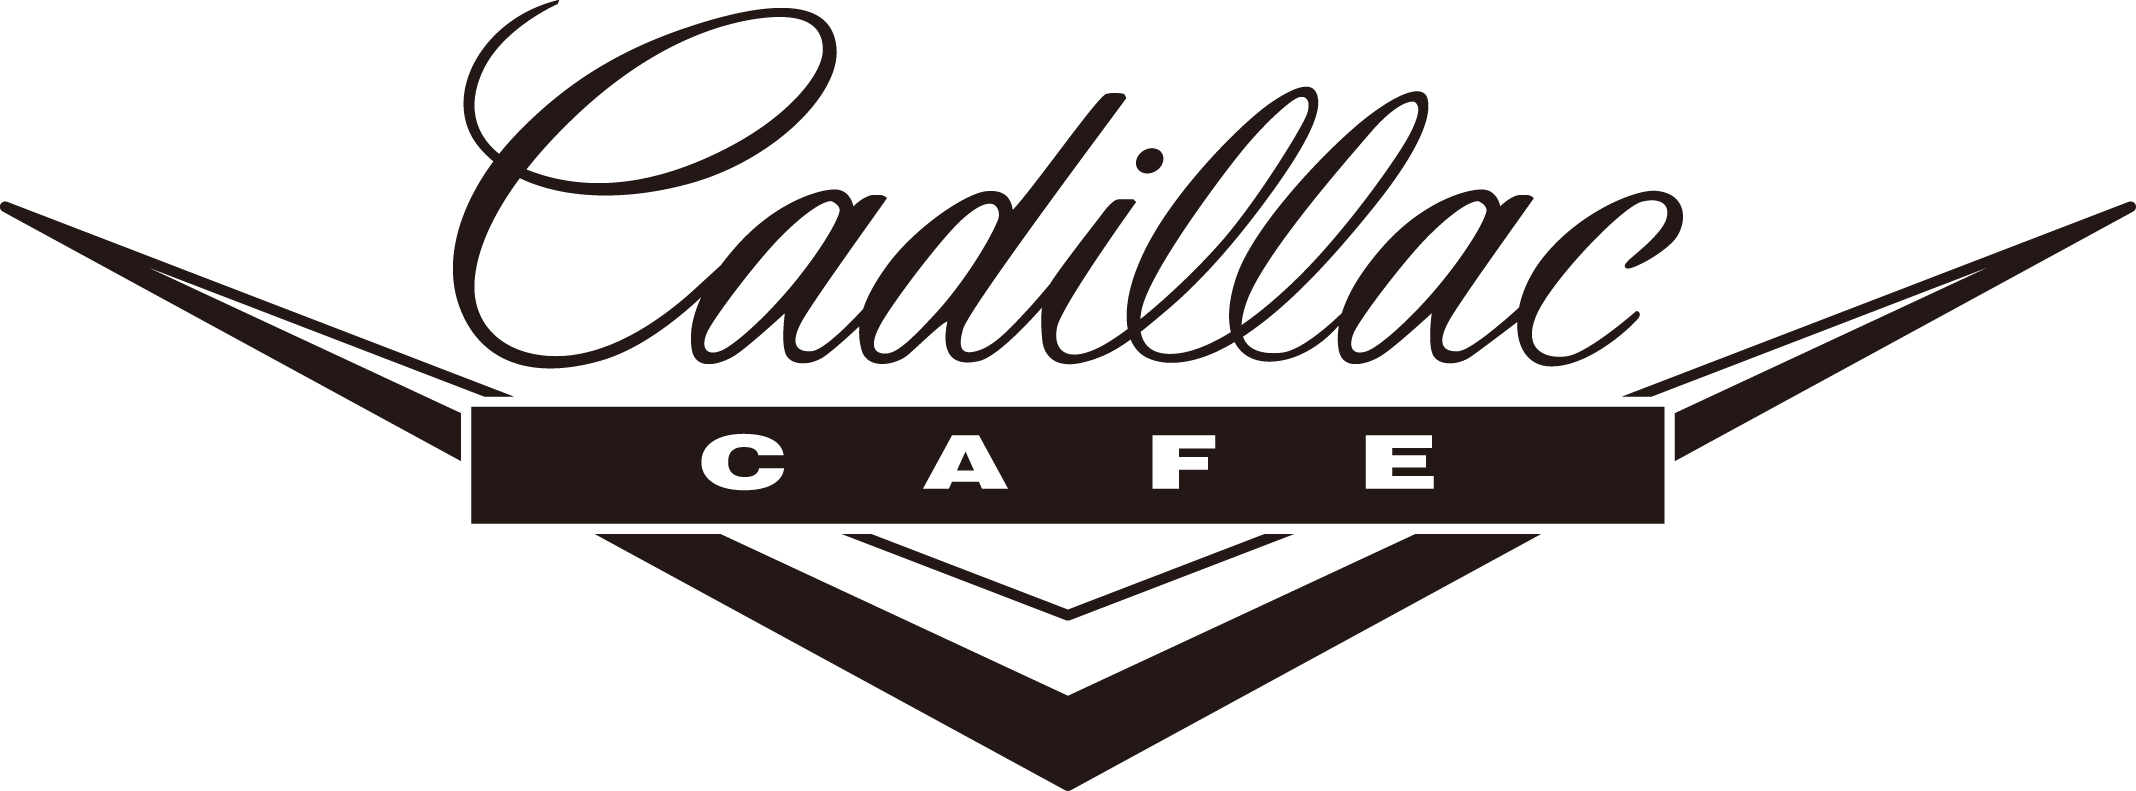 Cadillac Cafe logo